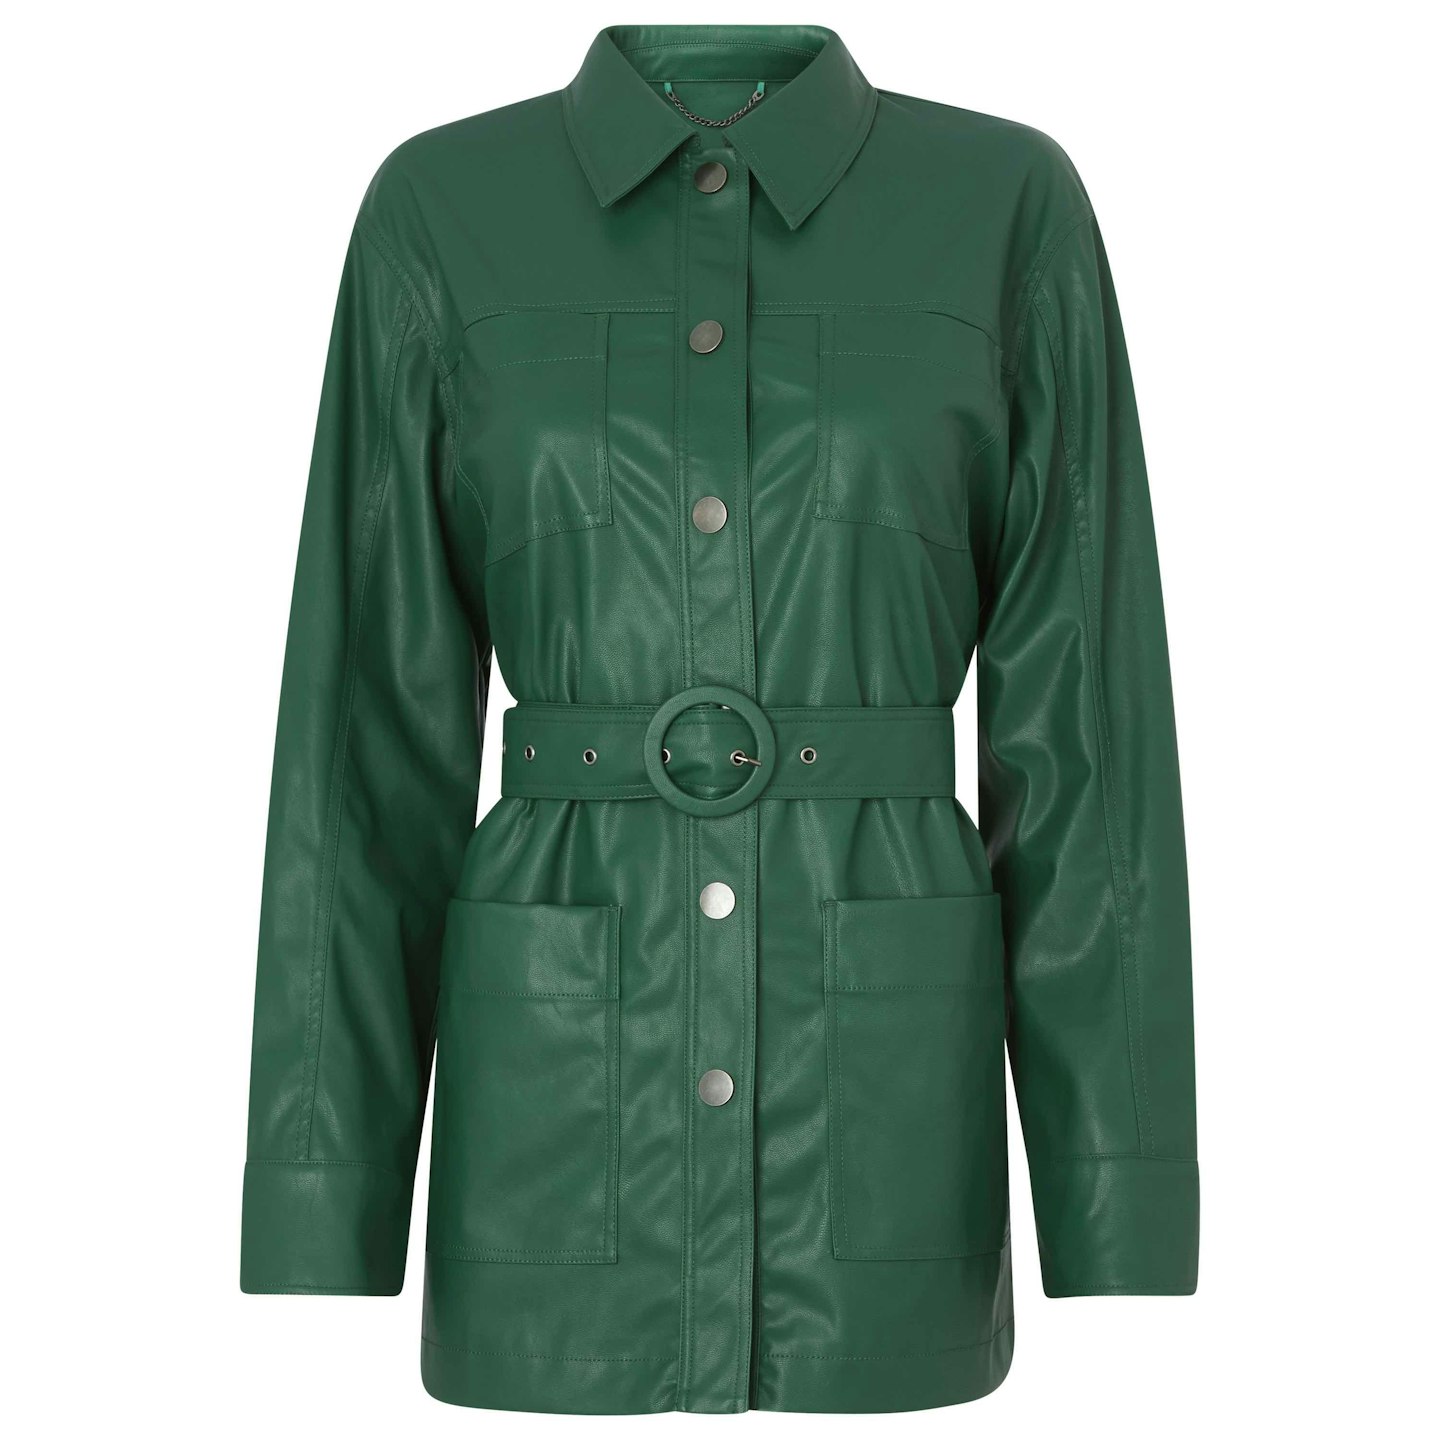 Green Vegan Leather Jacket, £195